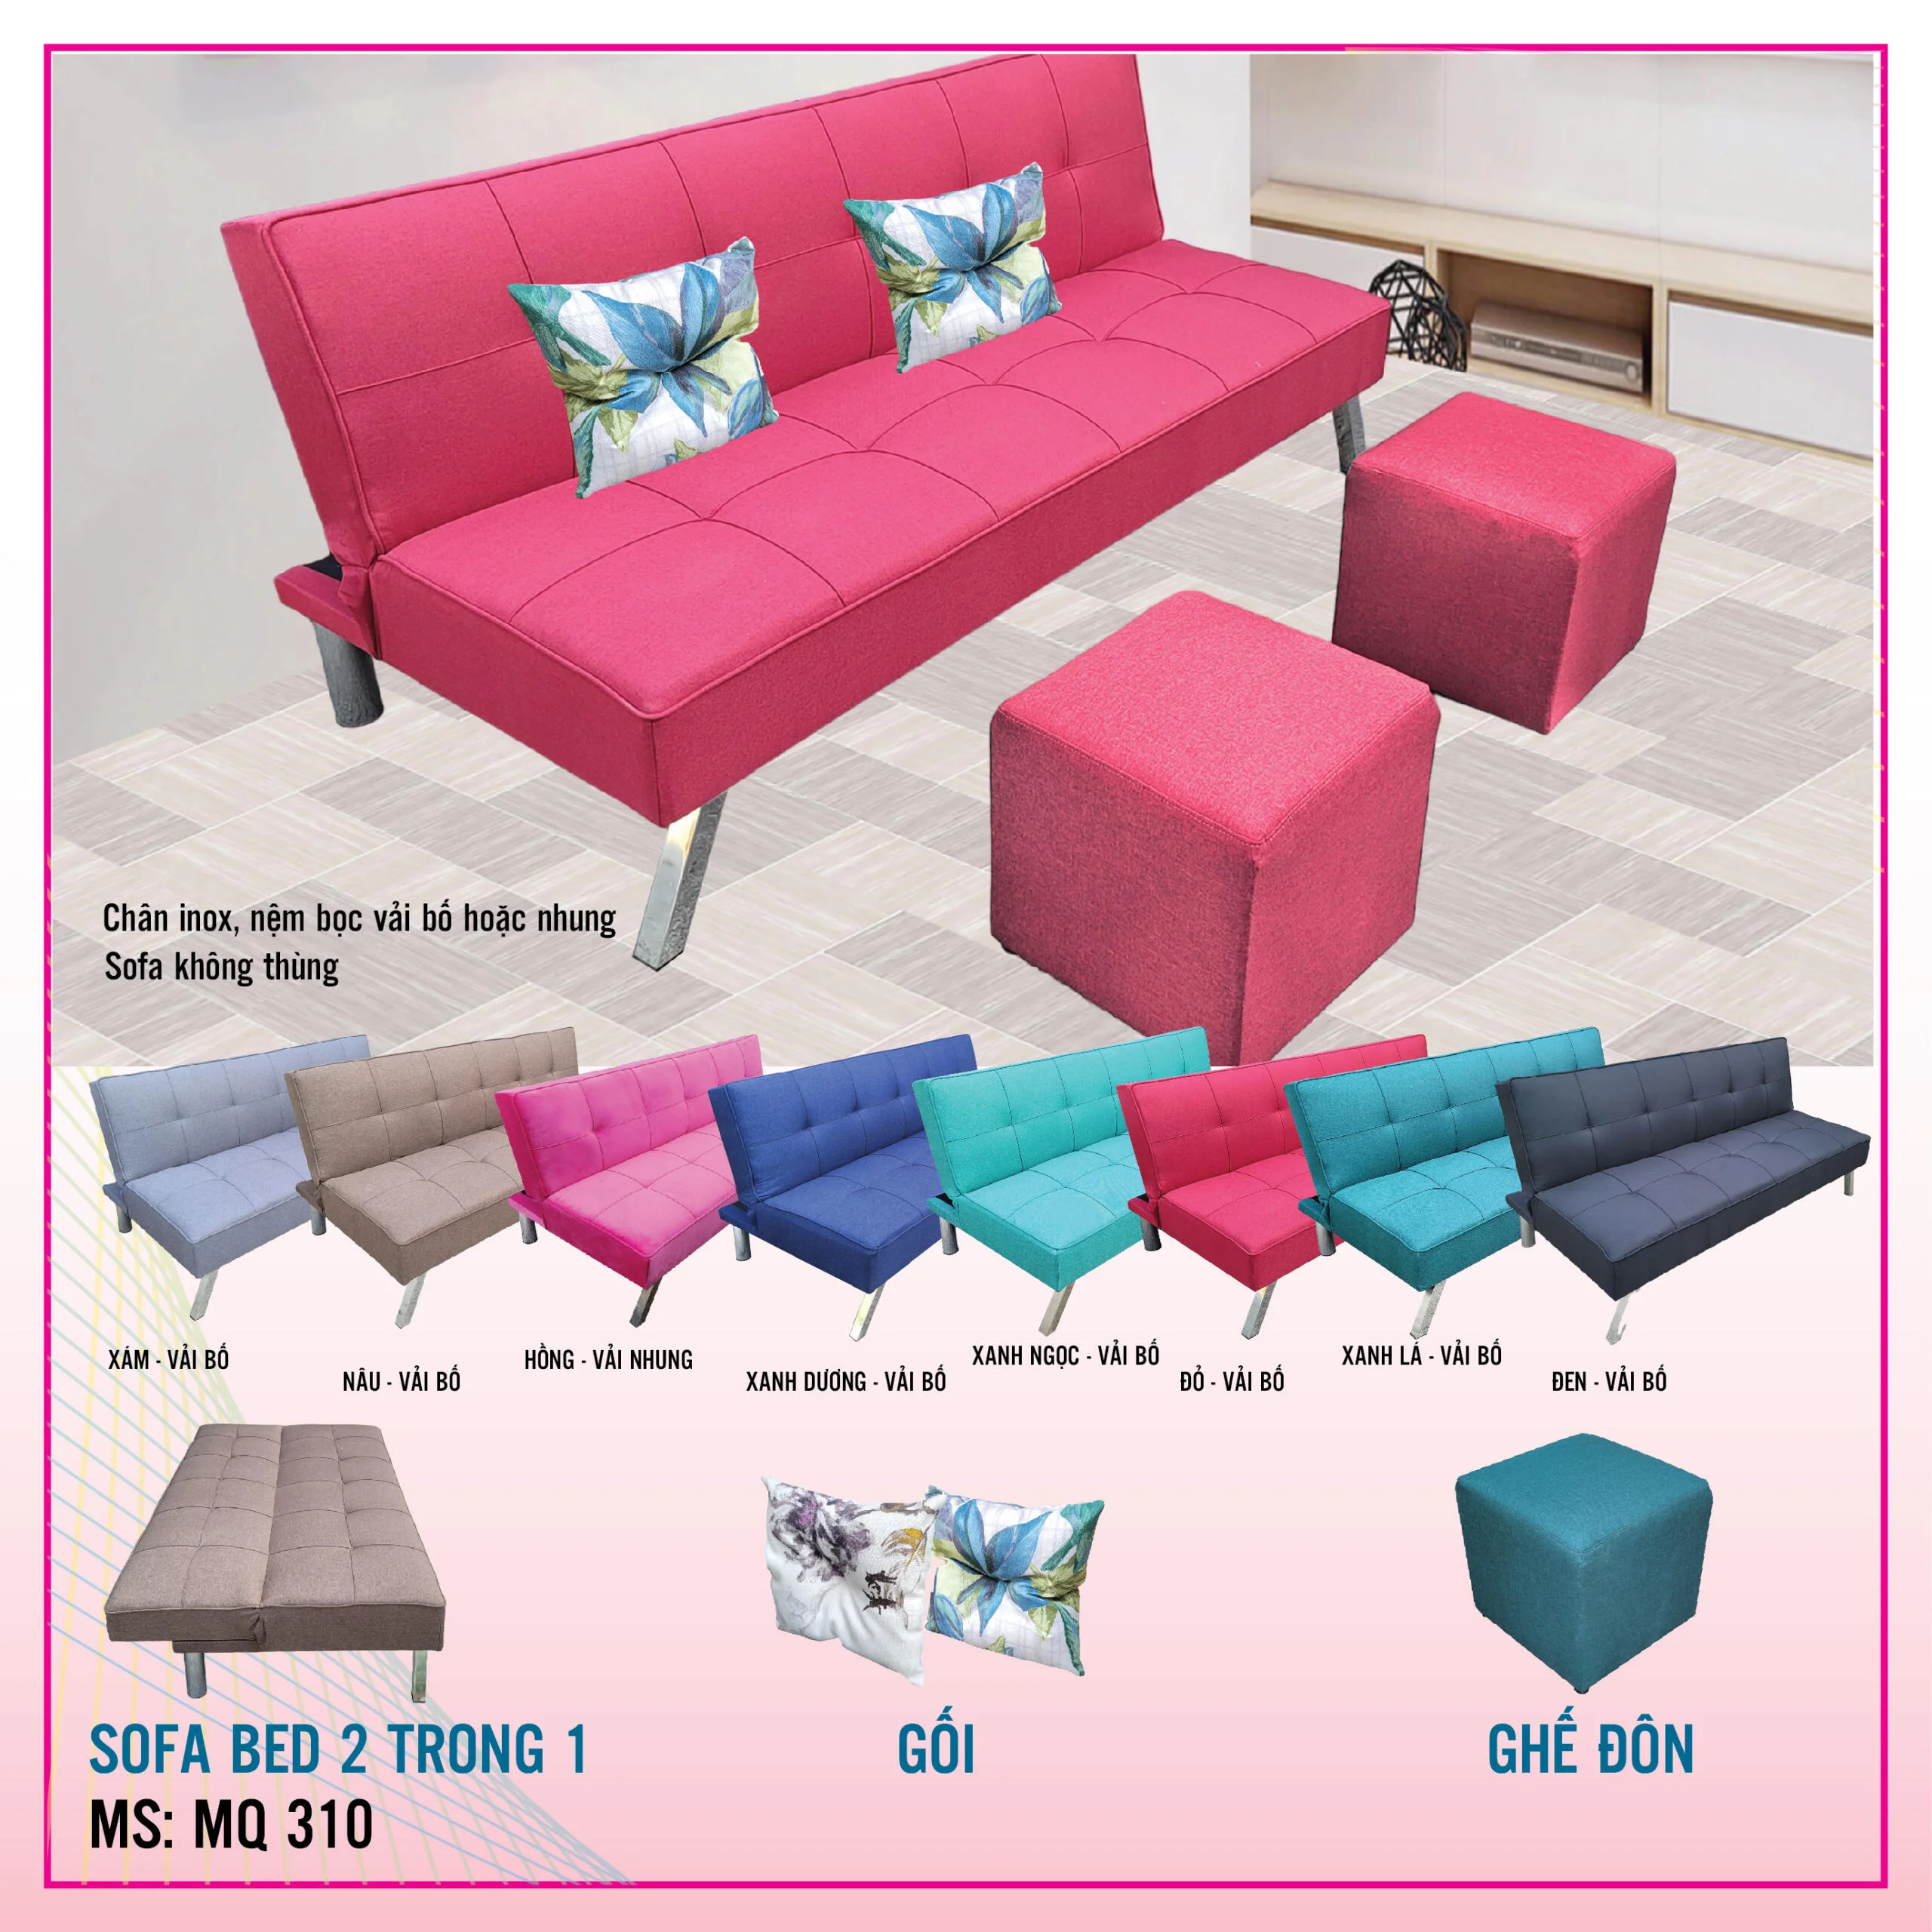 khong gia - Sofa bed 2 in 1 - KHONG tay-01